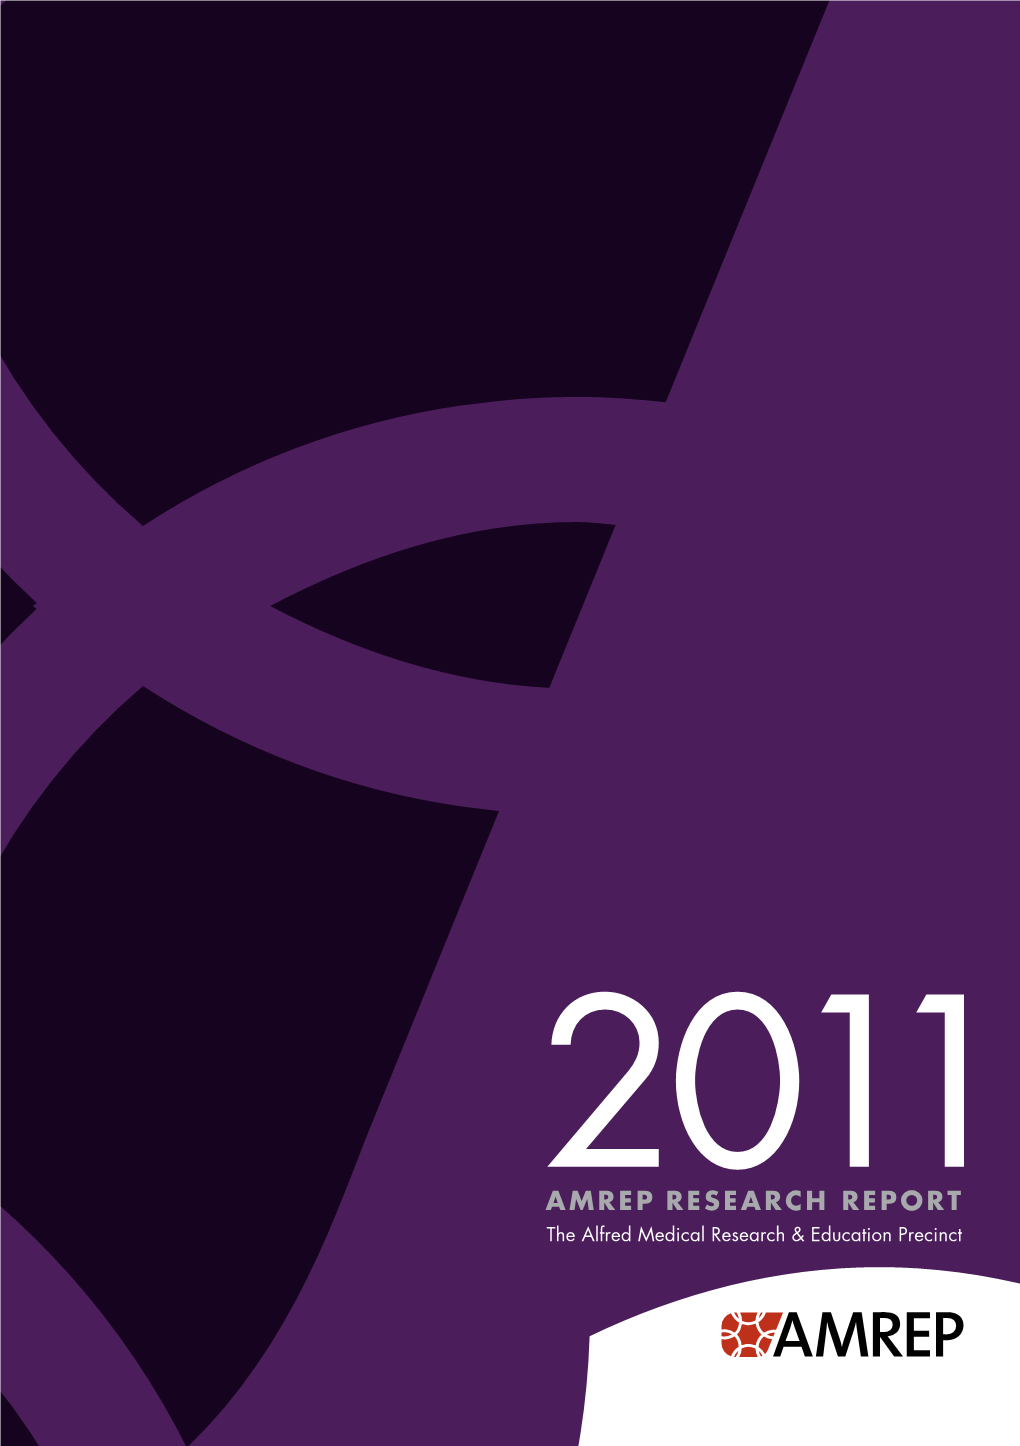 AMREP Research Report 2011